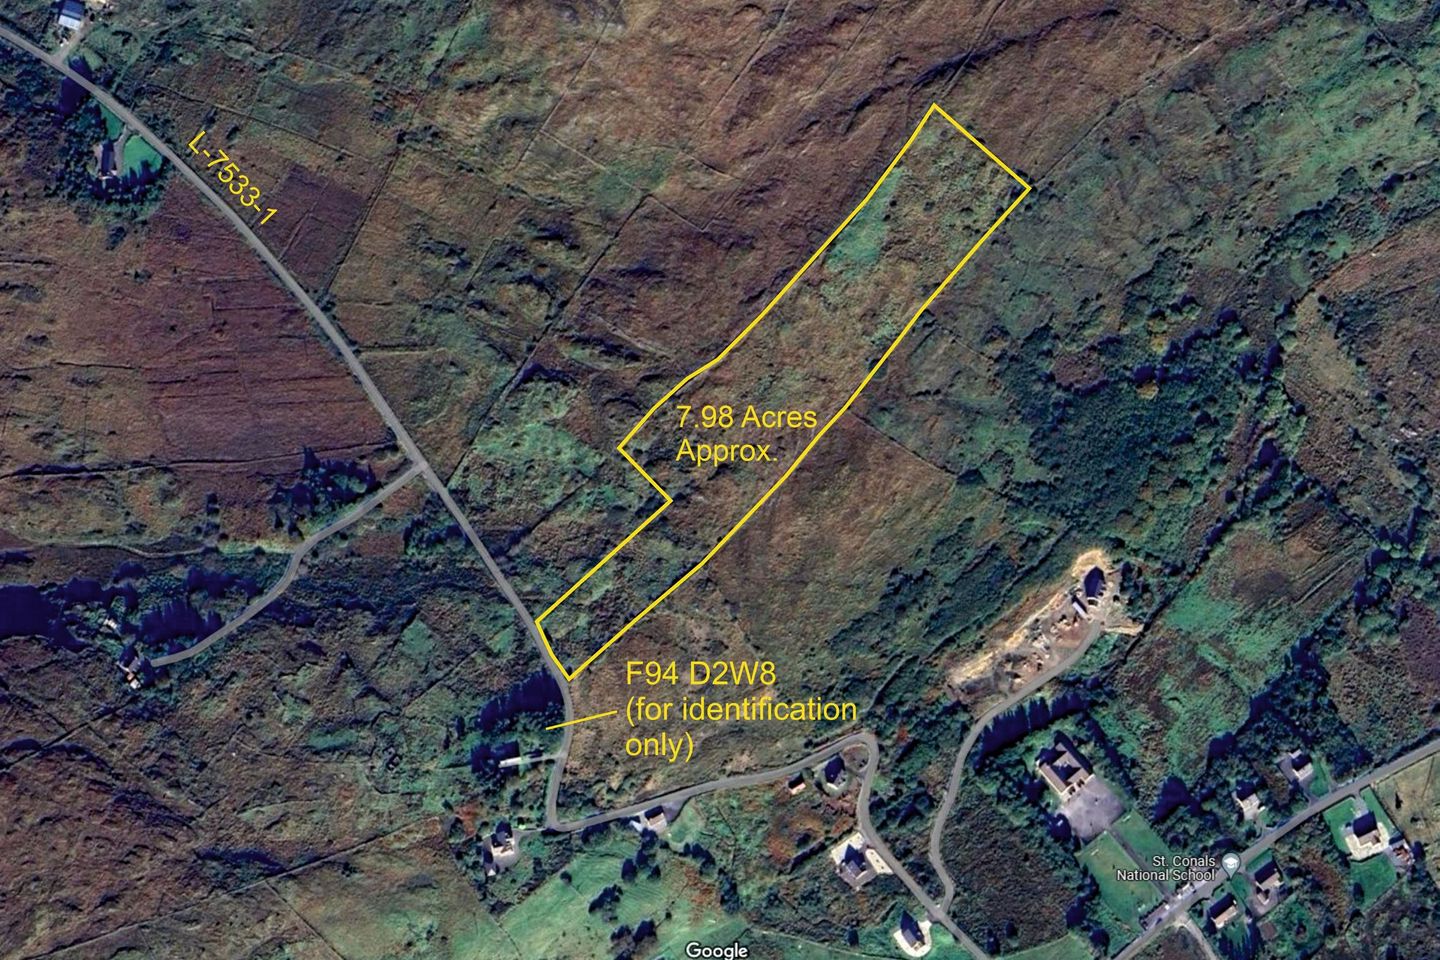 7.98 Acre Farm, Drumboghill, Portnoo, Co. Donegal